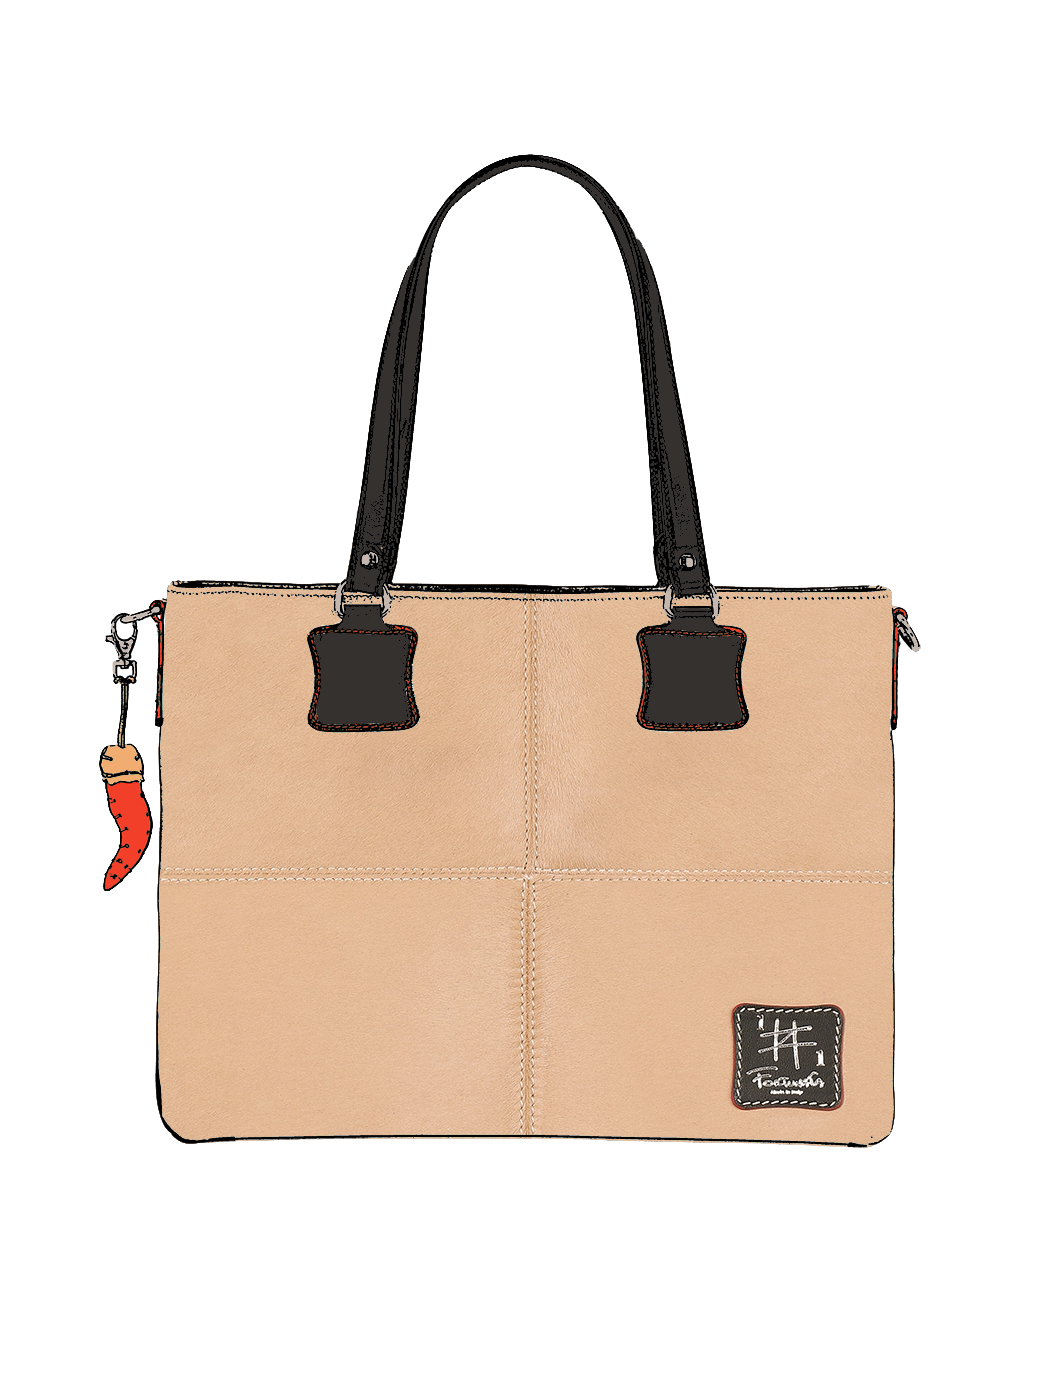 Buy Crossbody Bags for Women, Multi Pocket Shoulder Bag Waterproof Nylon  Travel Purses and Handbags (8981-Lake Blue) at Amazon.in